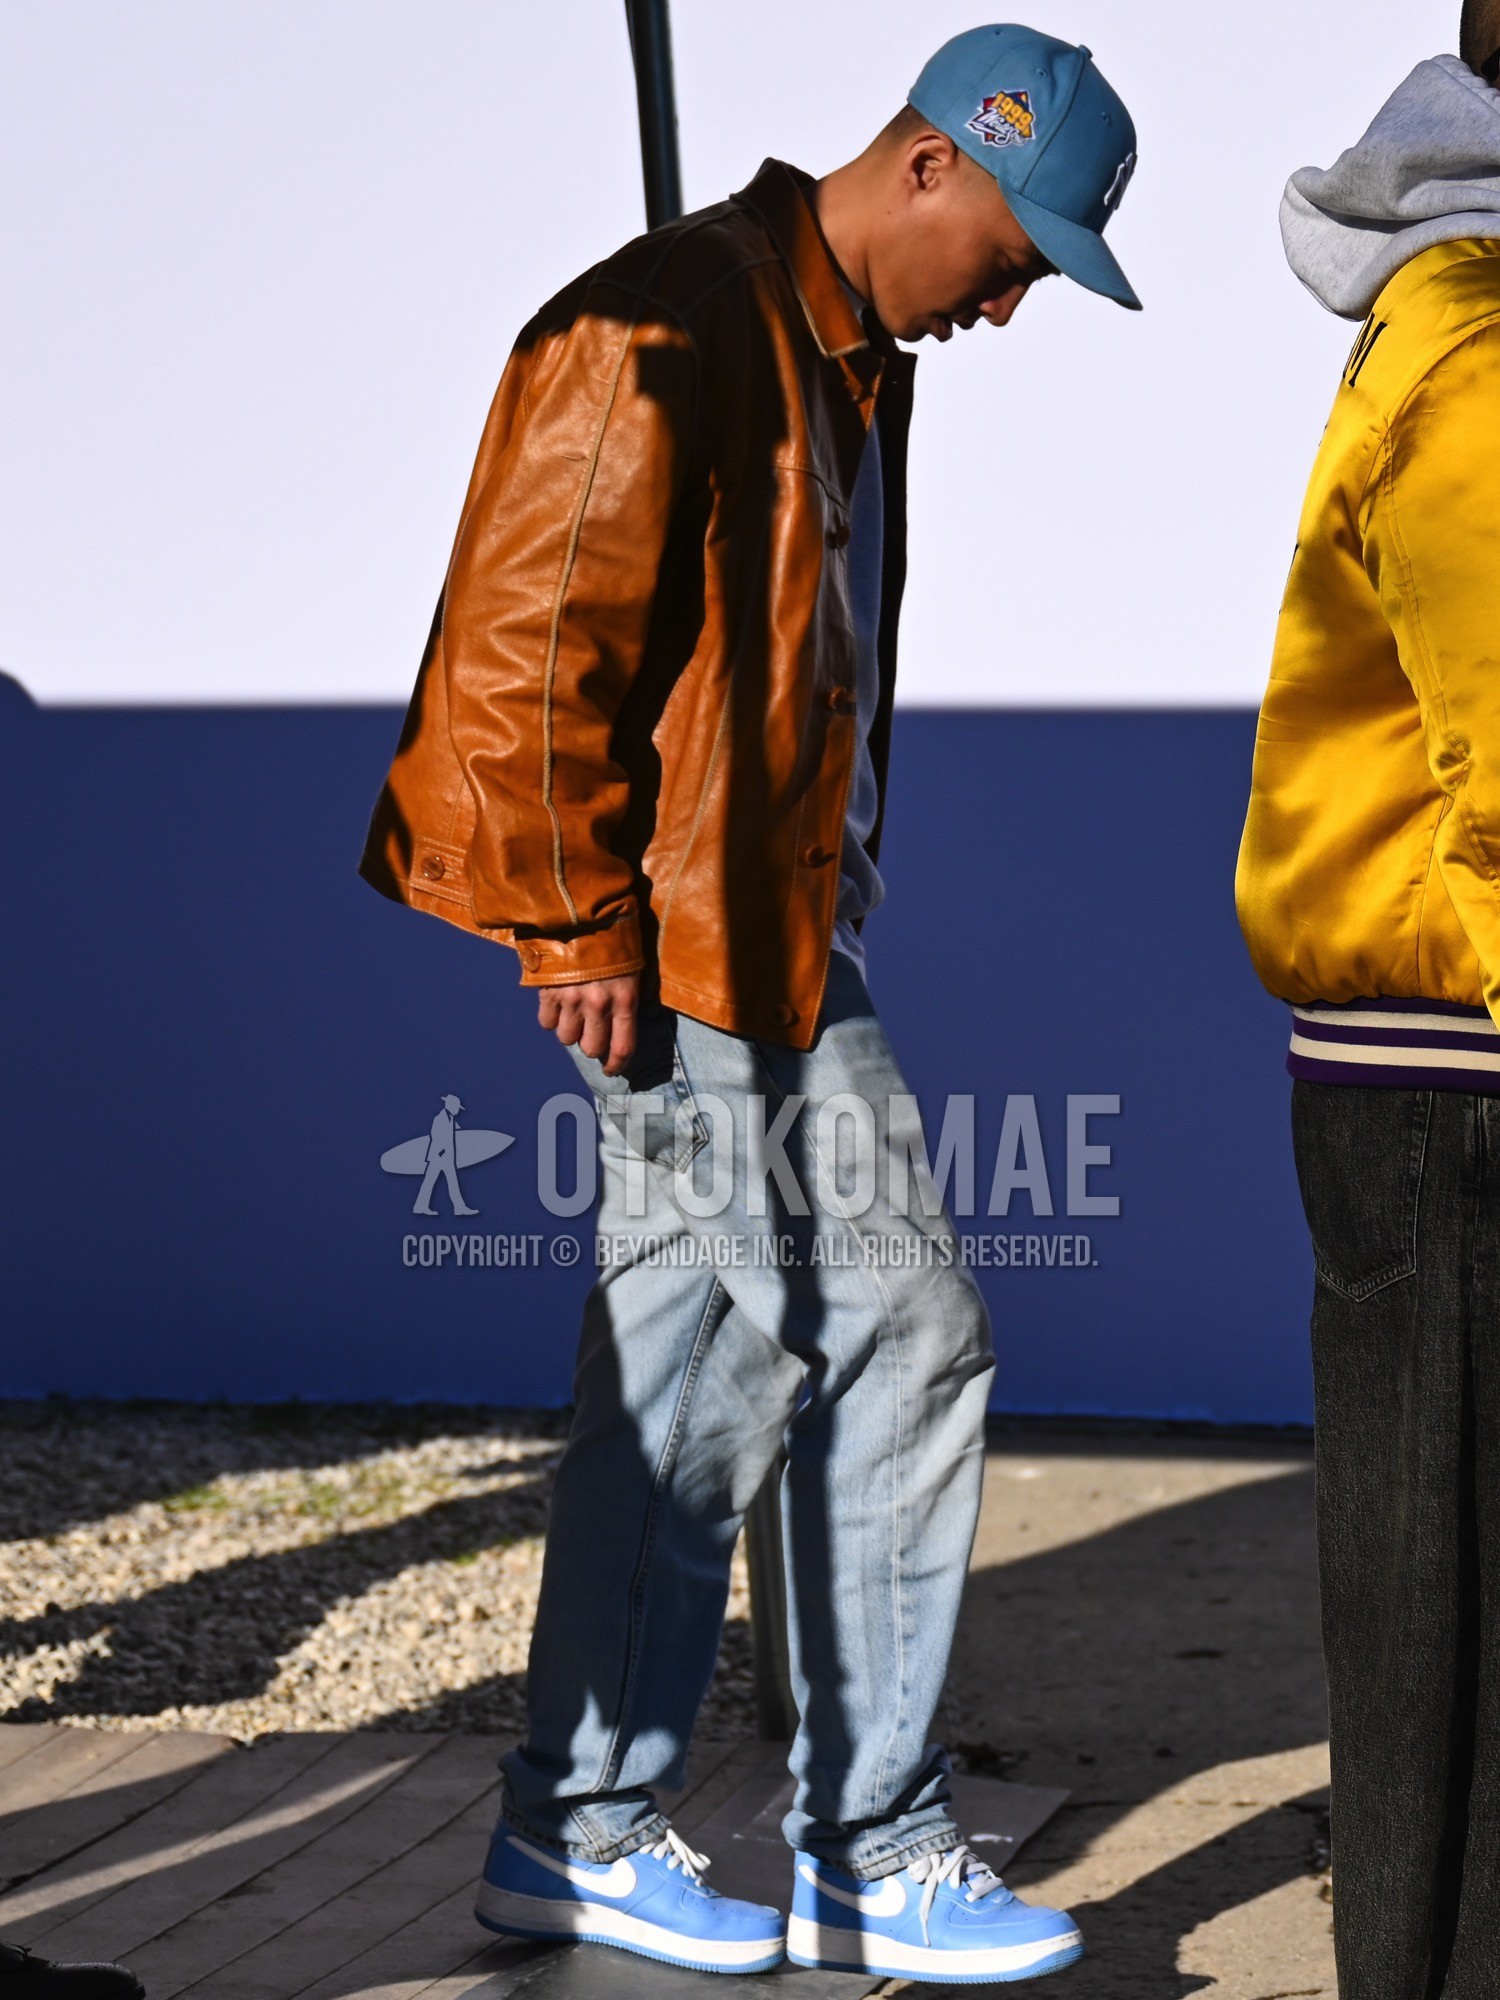 Men's spring autumn winter outfit with blue one point baseball cap, brown plain leather jacket, gray plain long sleeve t-shirt, blue plain denim/jeans, blue high-cut sneakers.